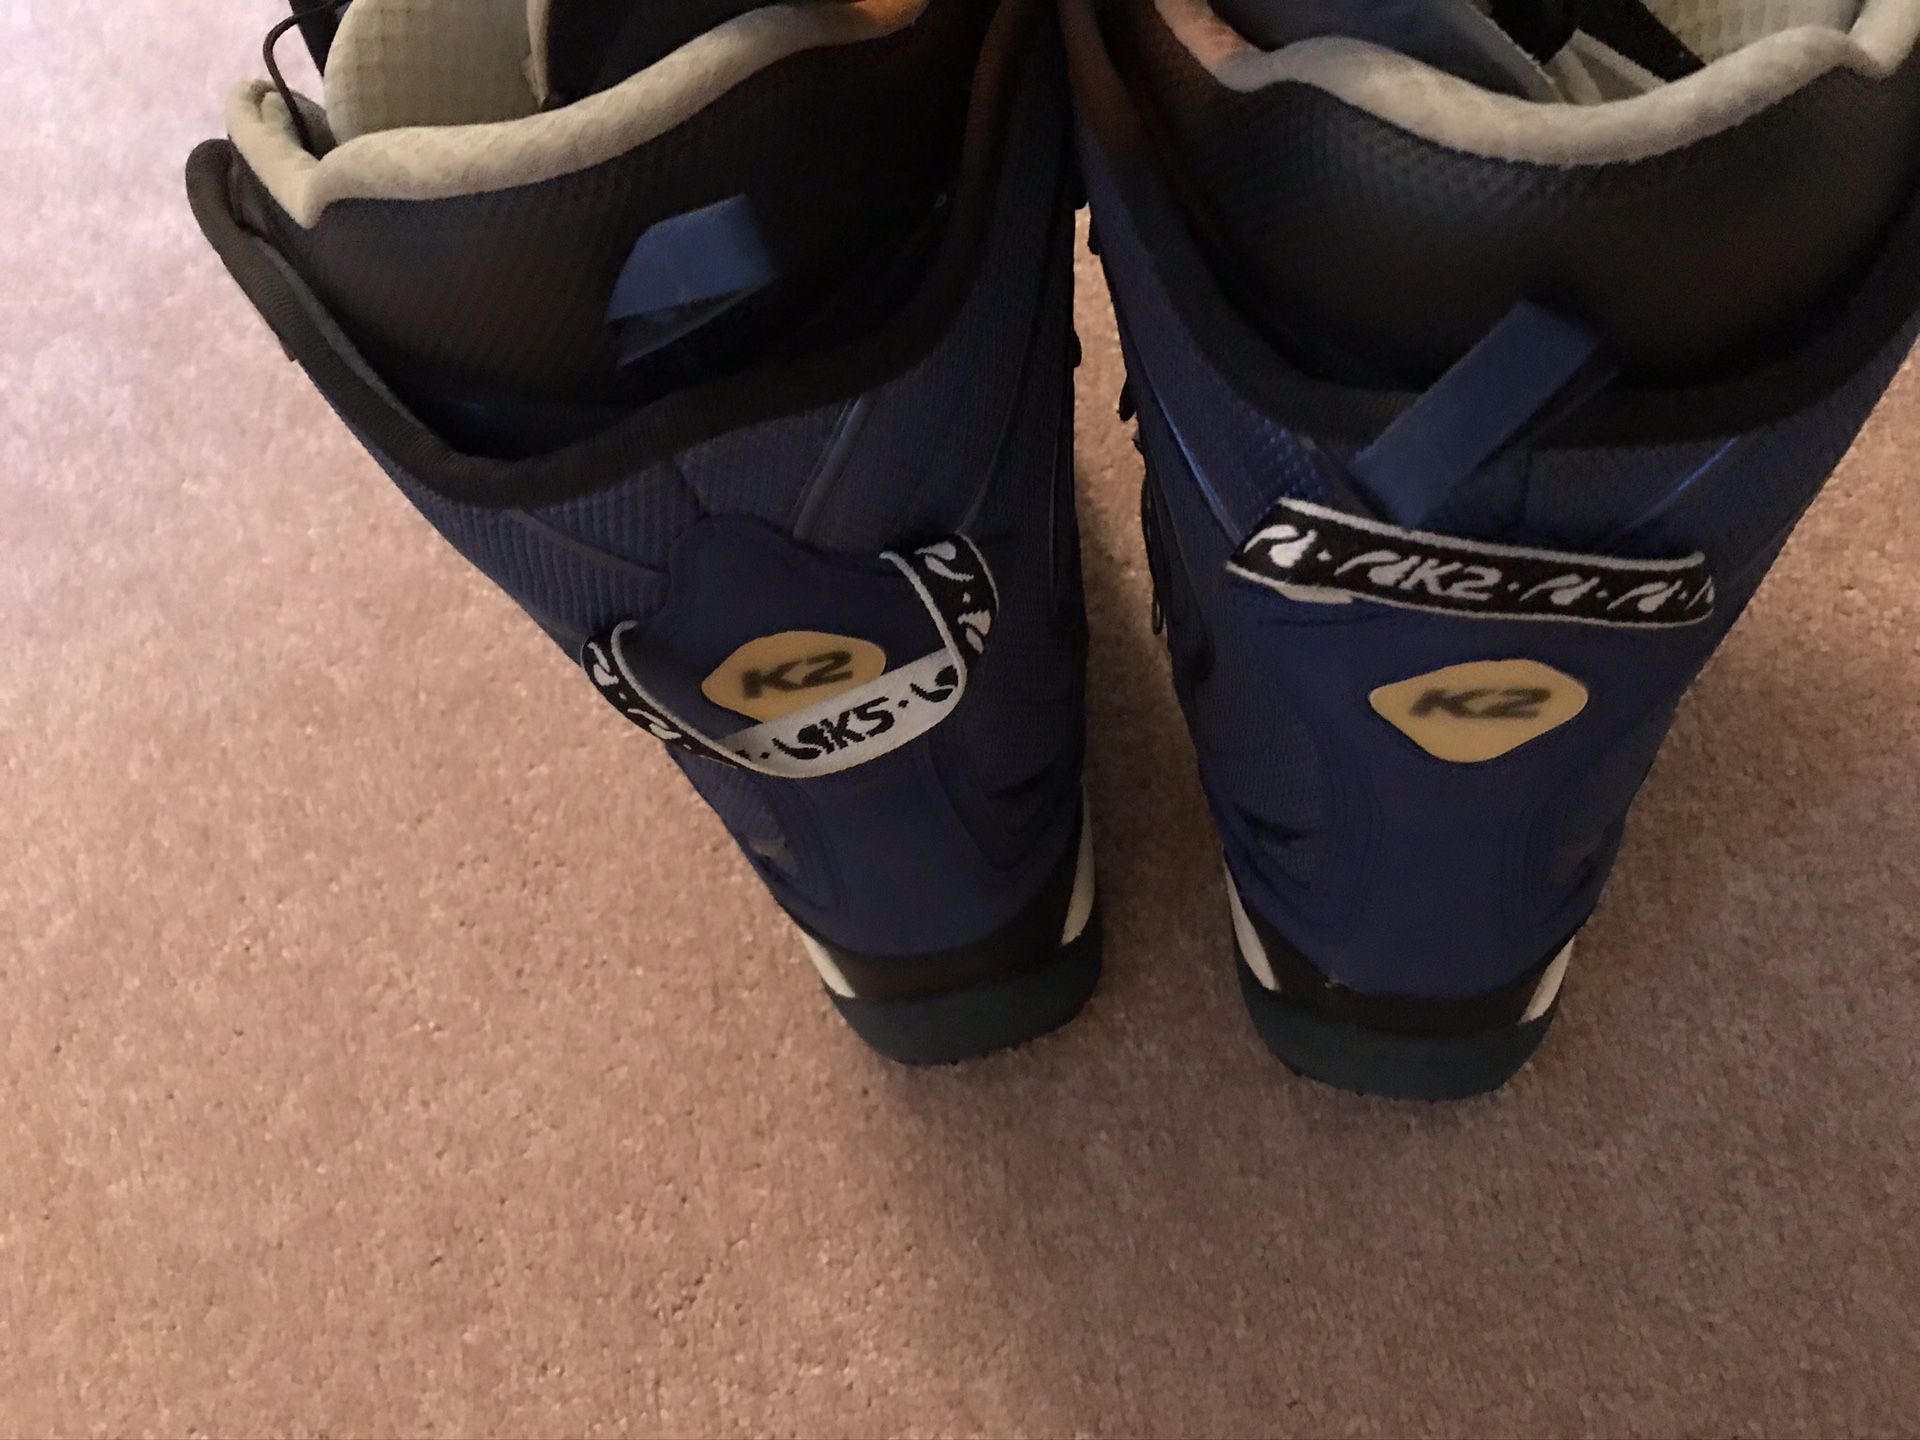 K2 snowboarding boots